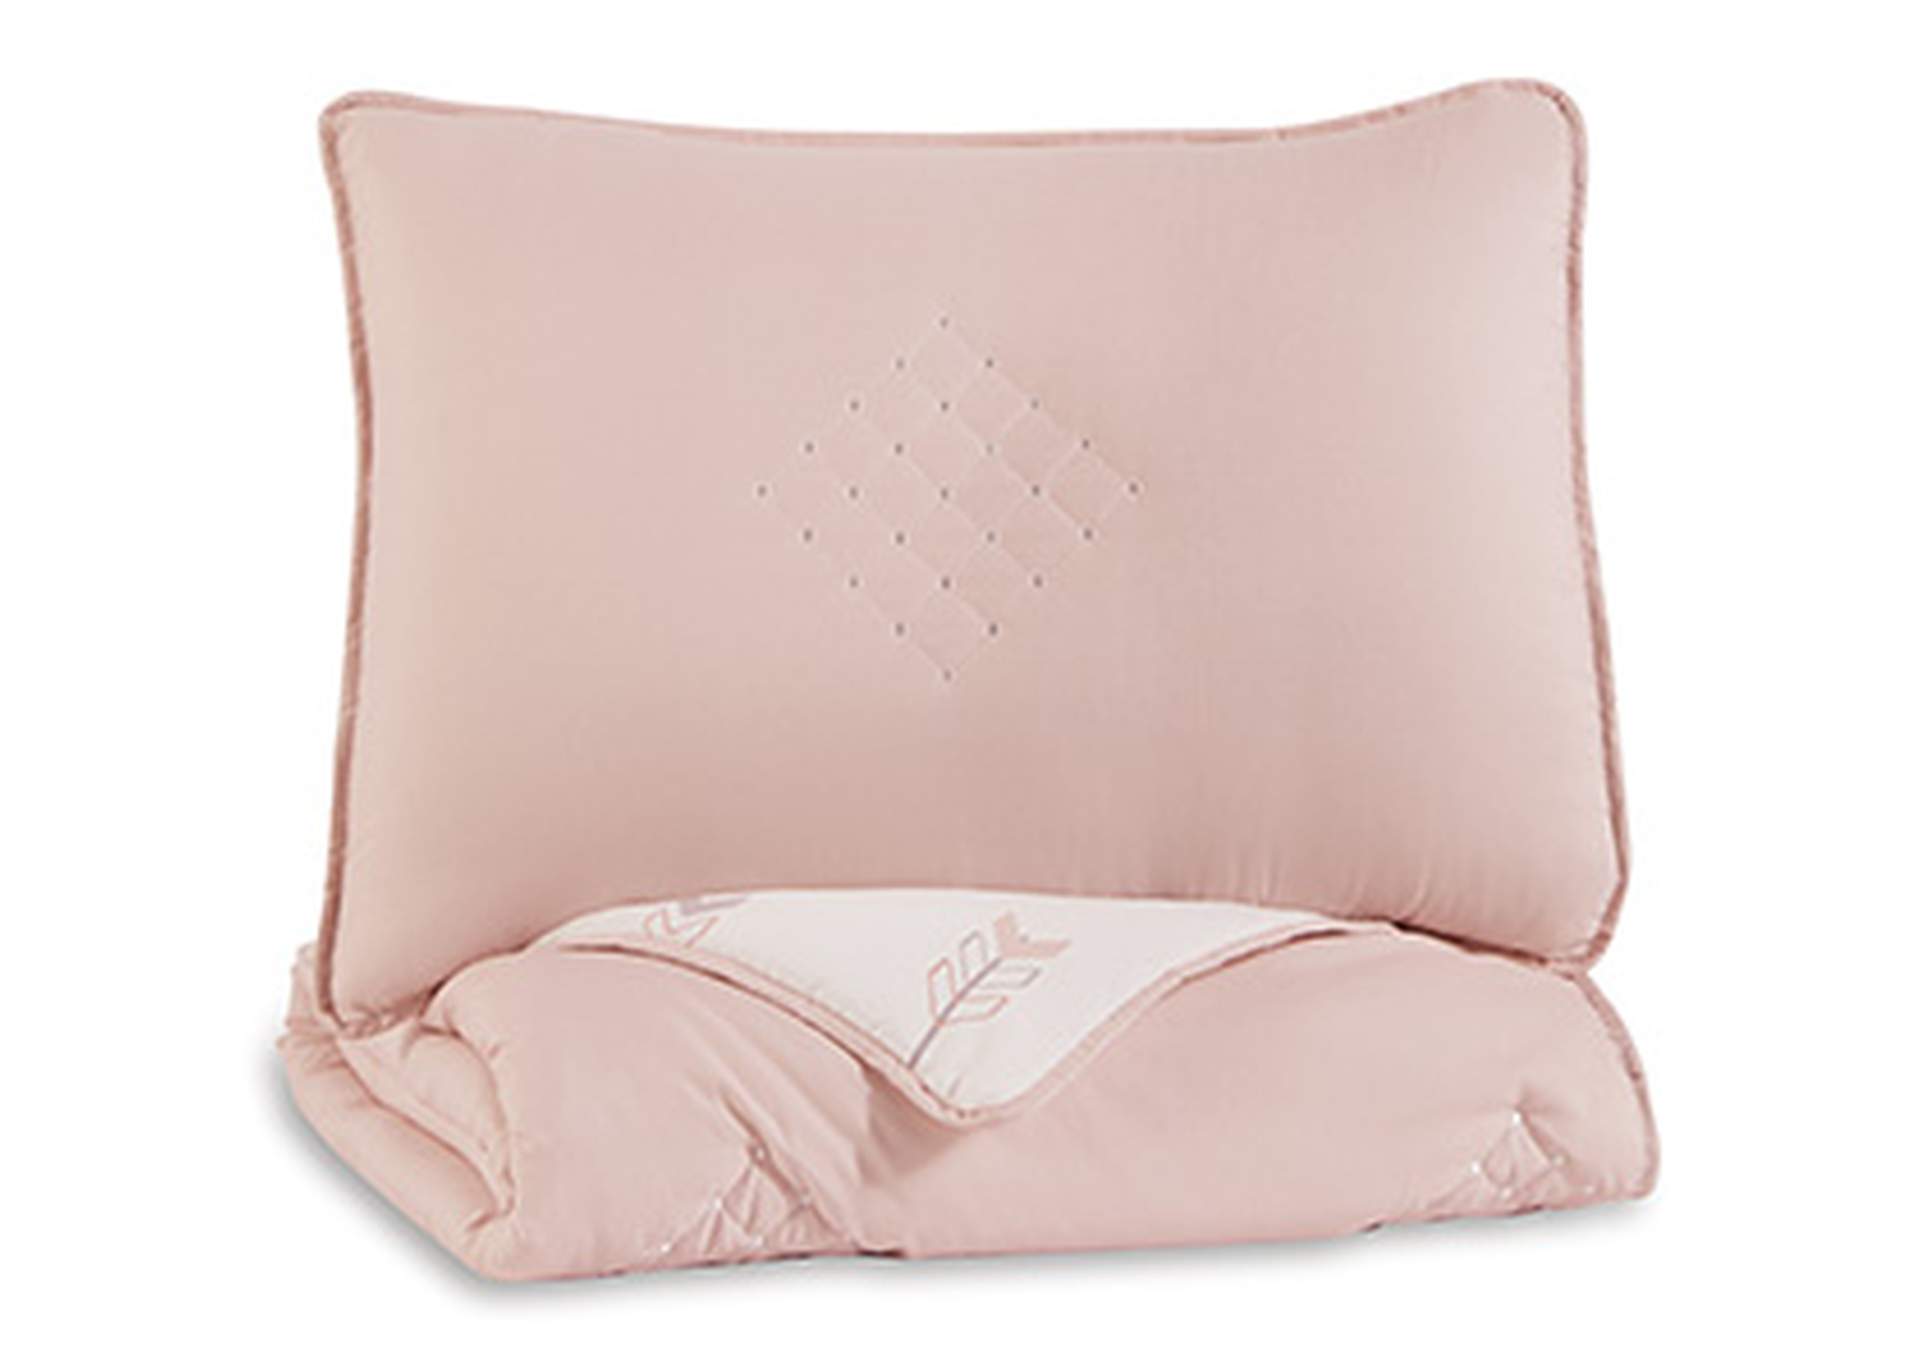 Lexann Twin Comforter Set,Signature Design By Ashley